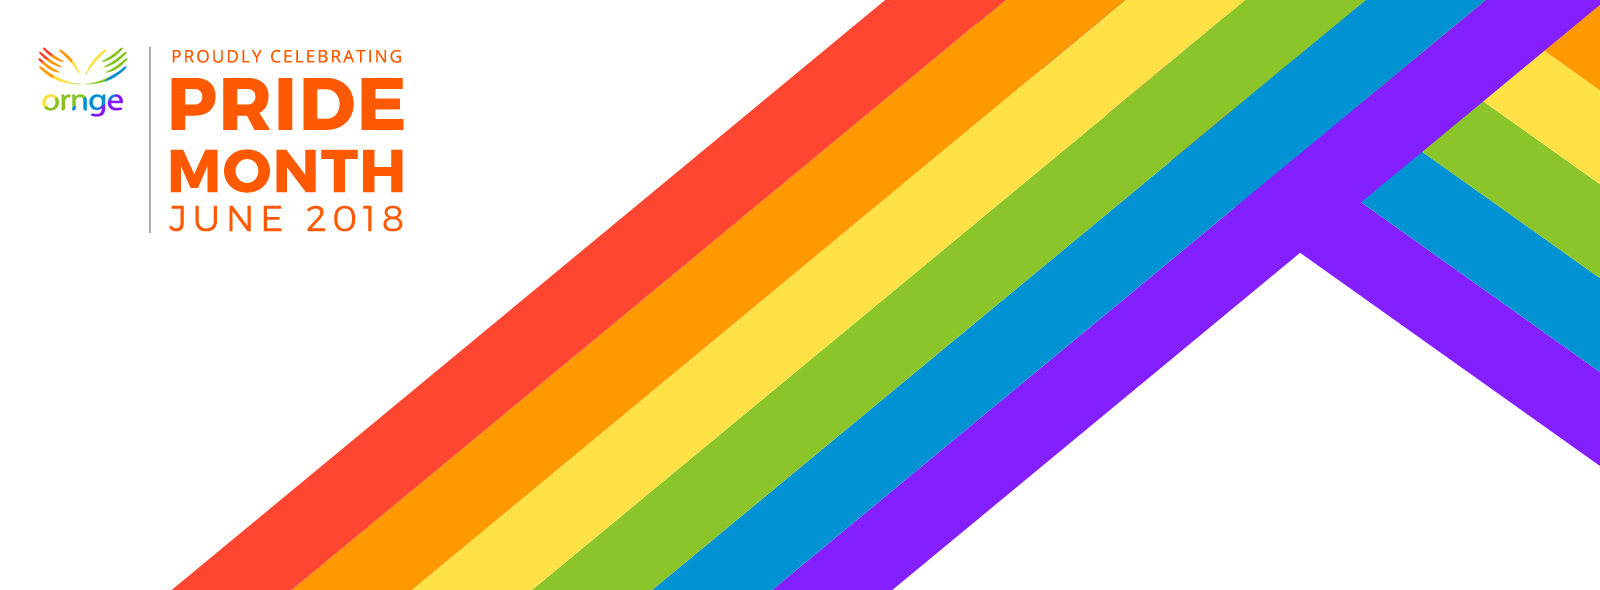 Ornge logo and pride rainbow